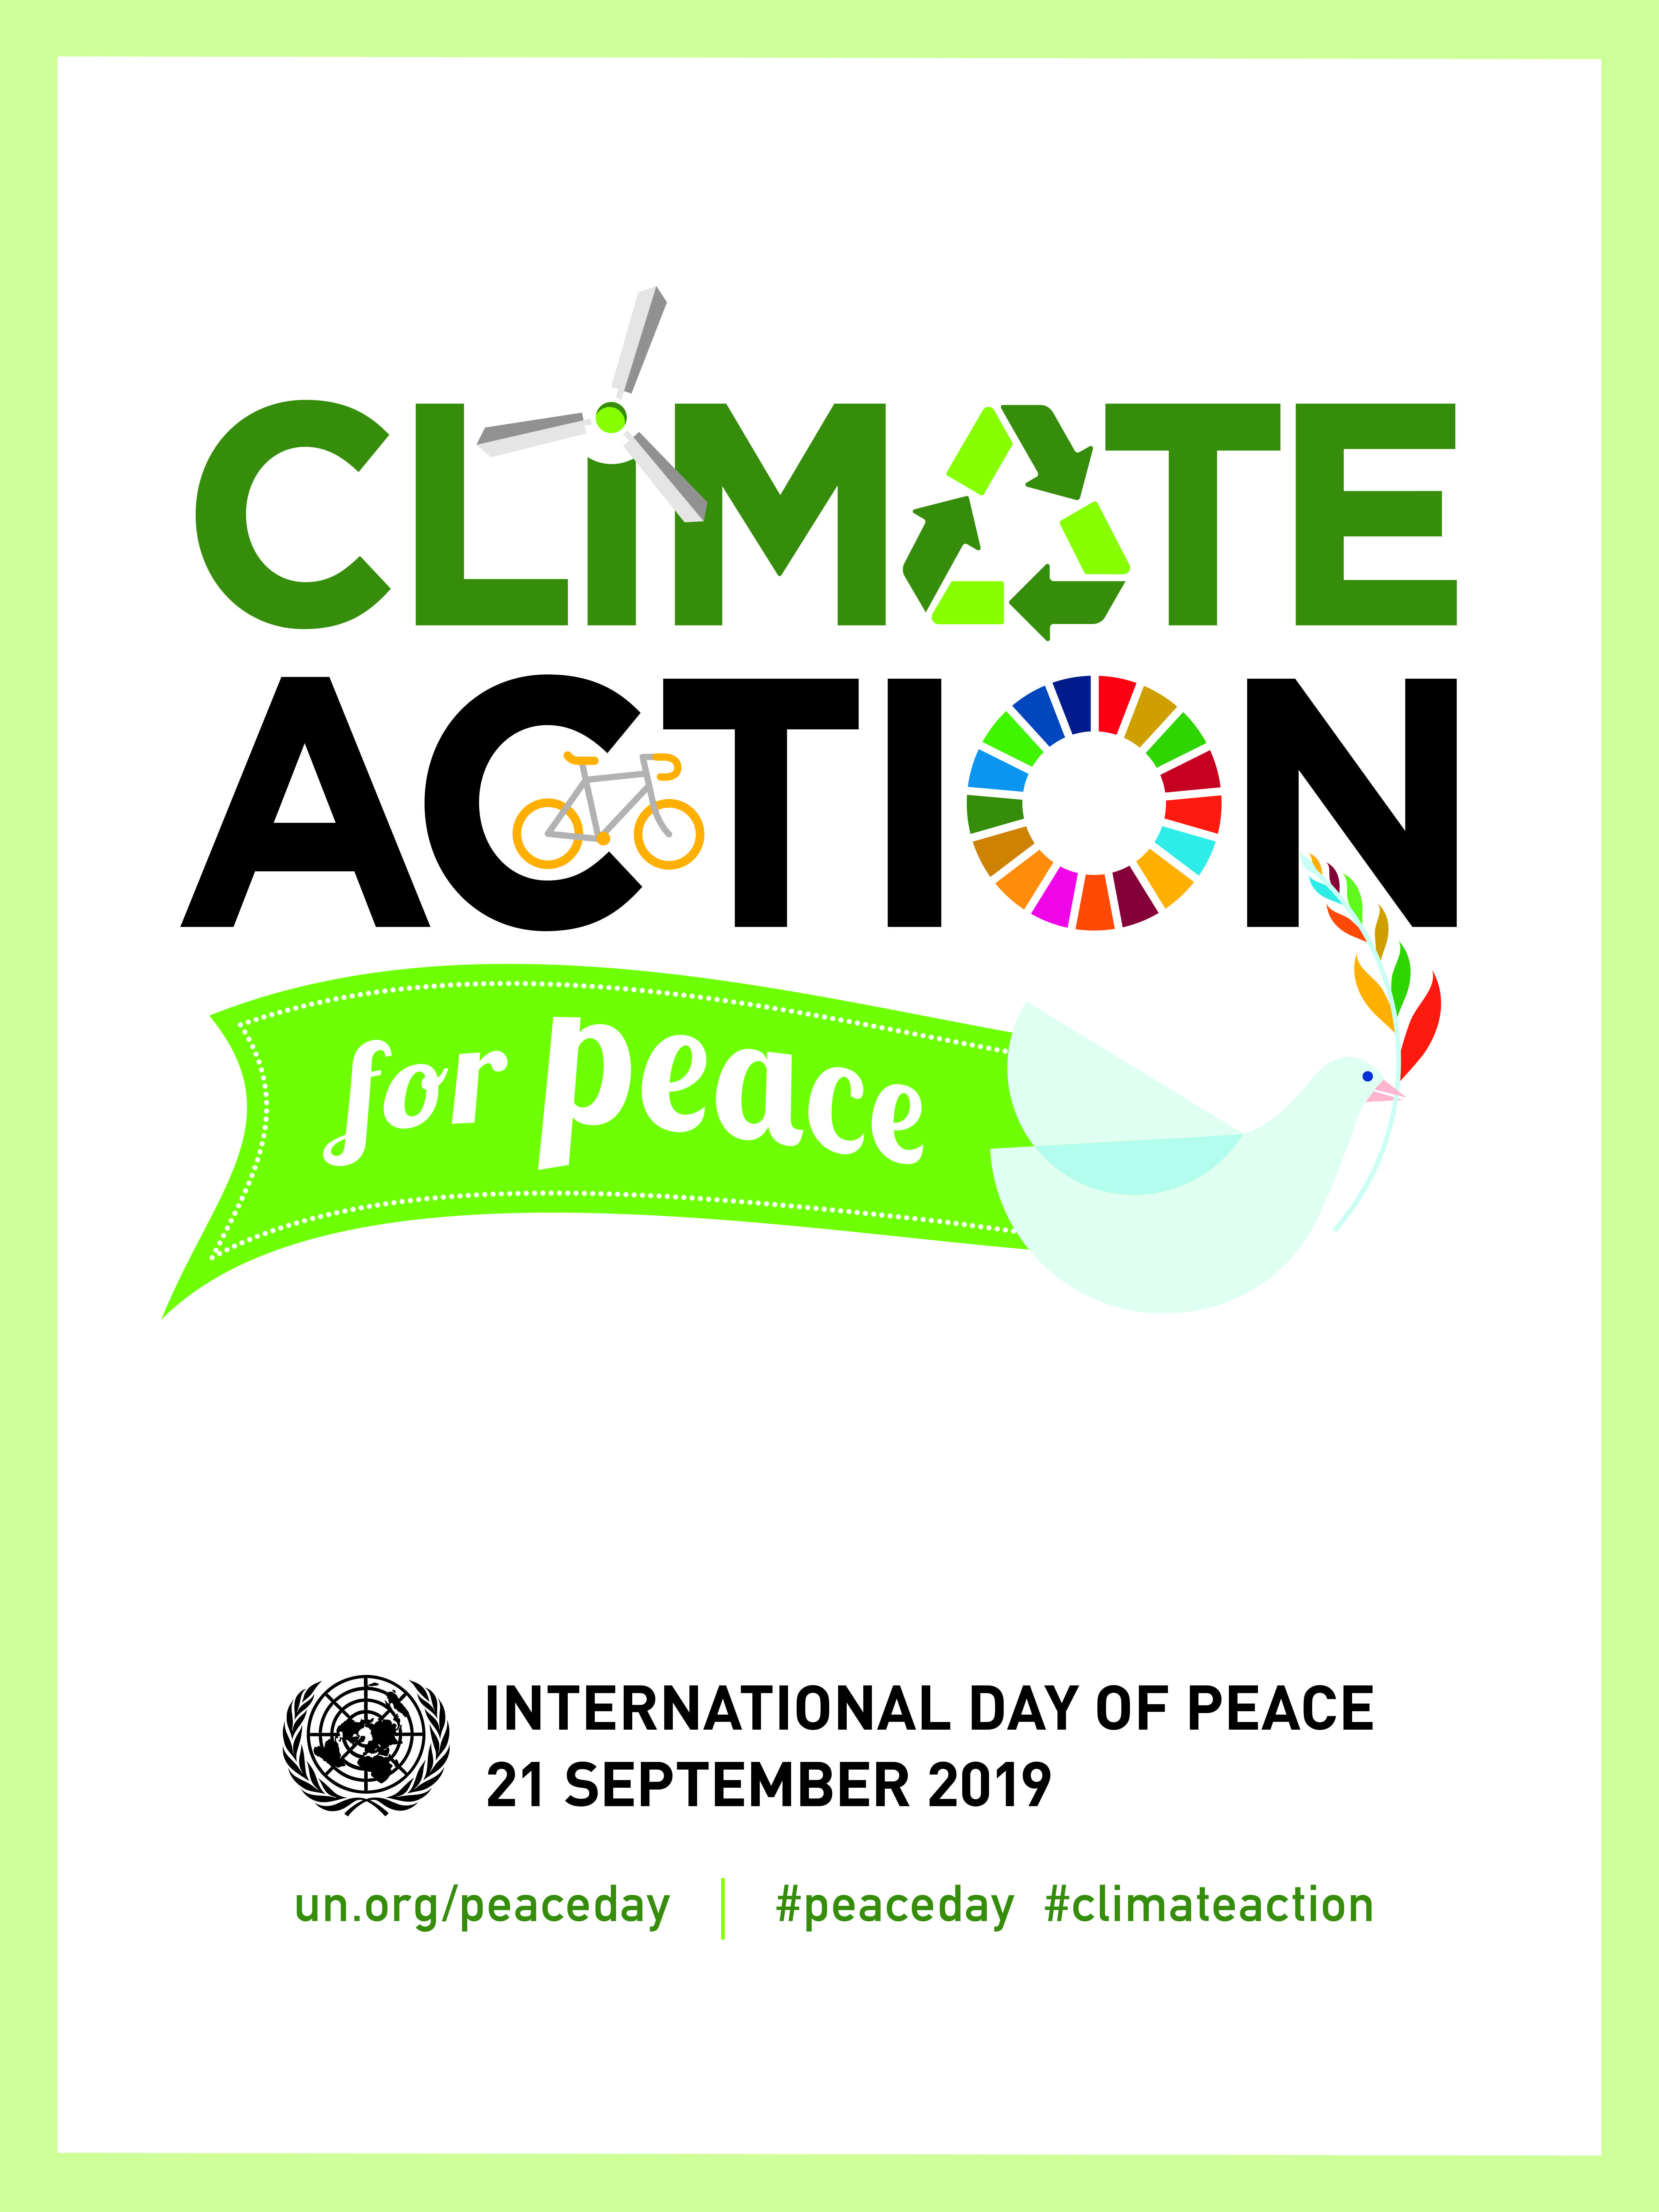 Un.org Logo - International Day of Peace 21 September